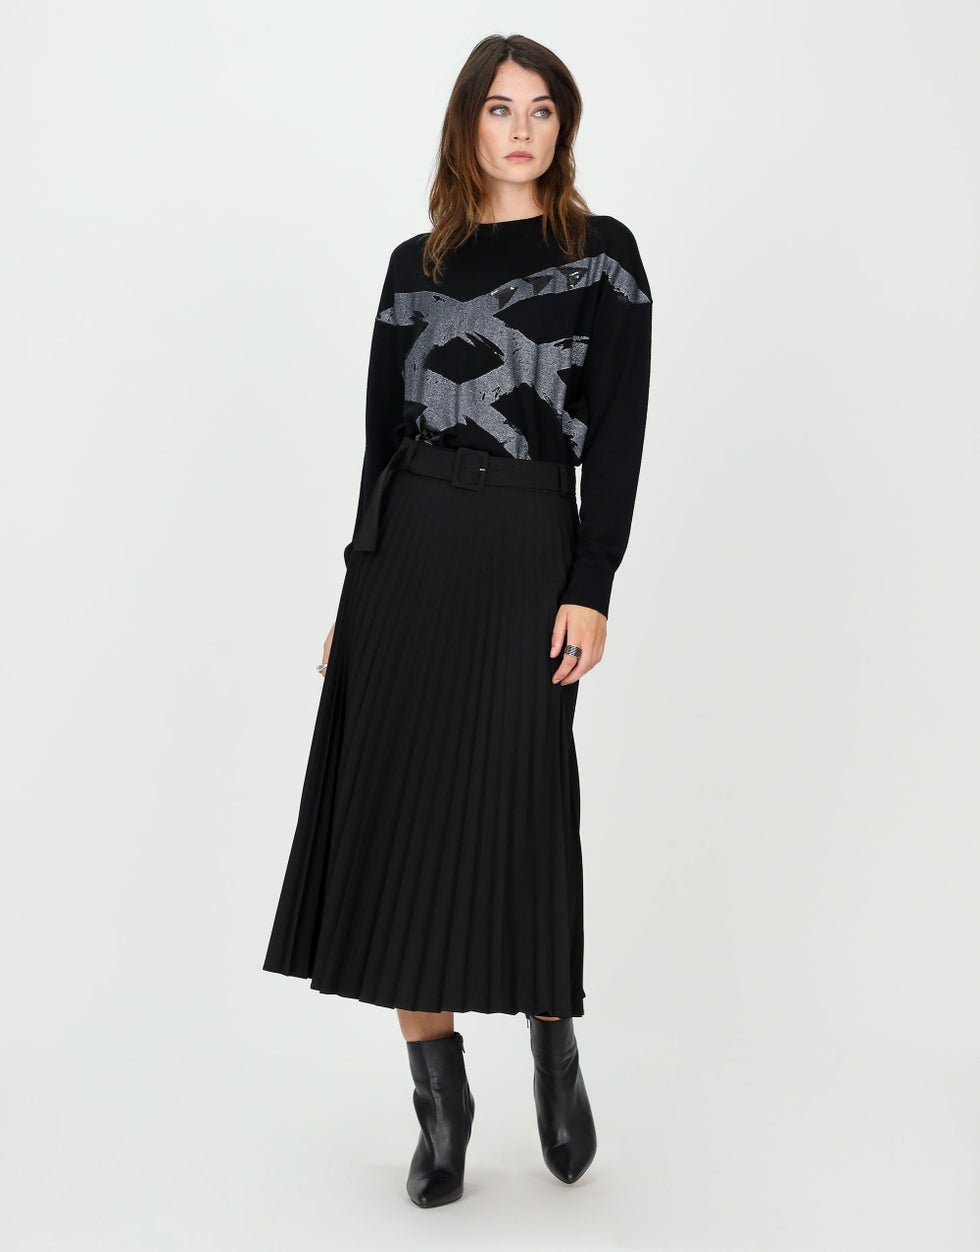 Wrong Way Merino Sweater - Black - Knitwear - Long Sleeve - Women's Clothing  - Storm